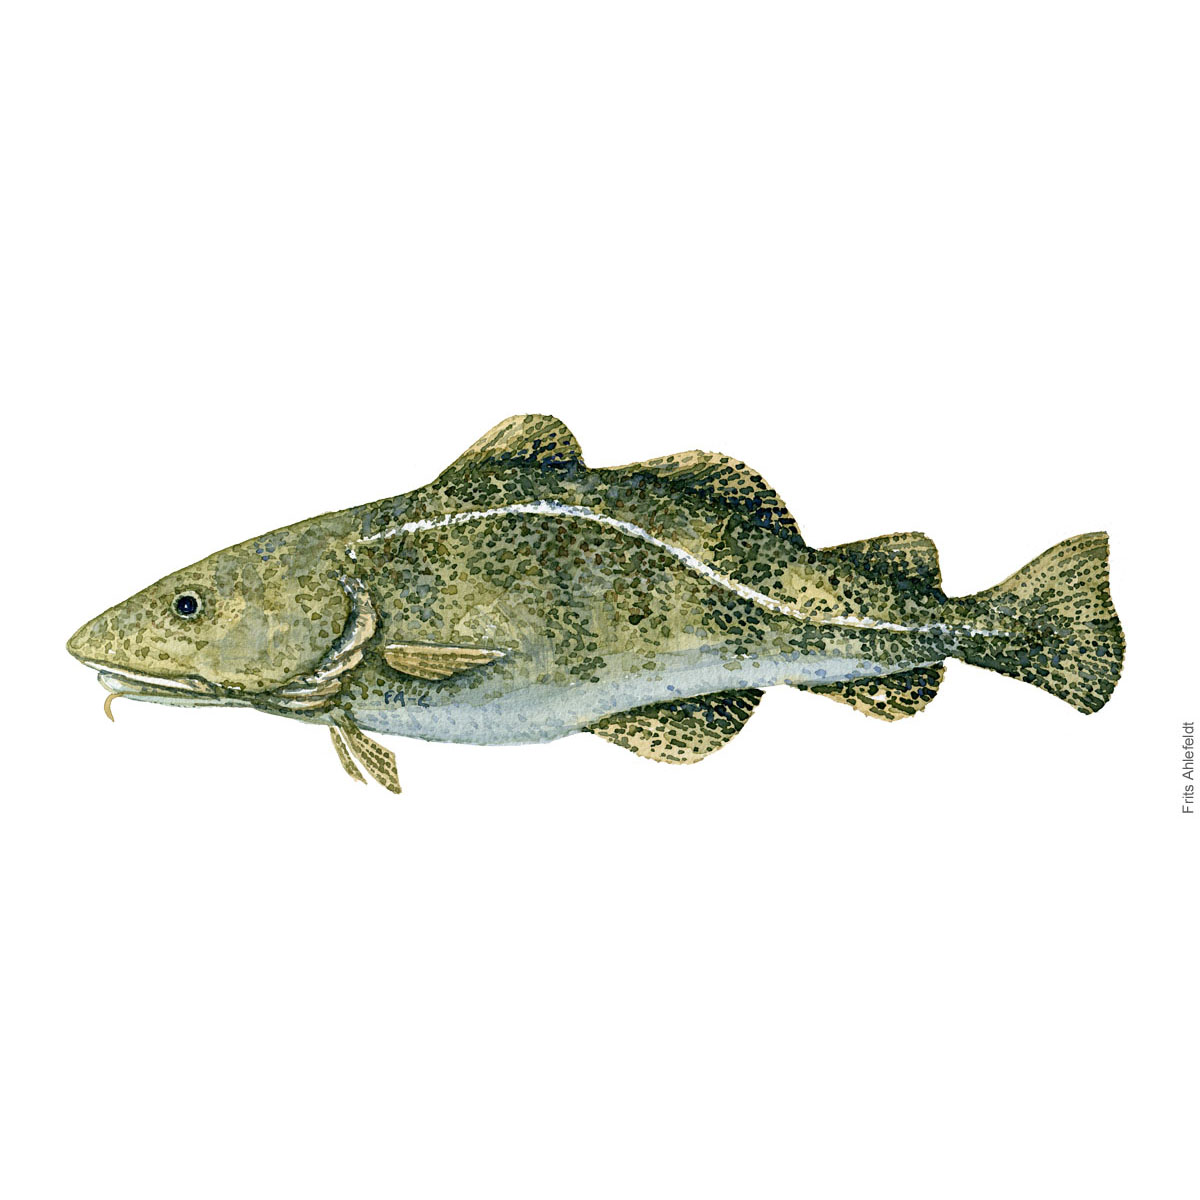 Torsk - Cod fish watercolor illustration. Painting by Frits Ahlefeldt. Fiske akvarel